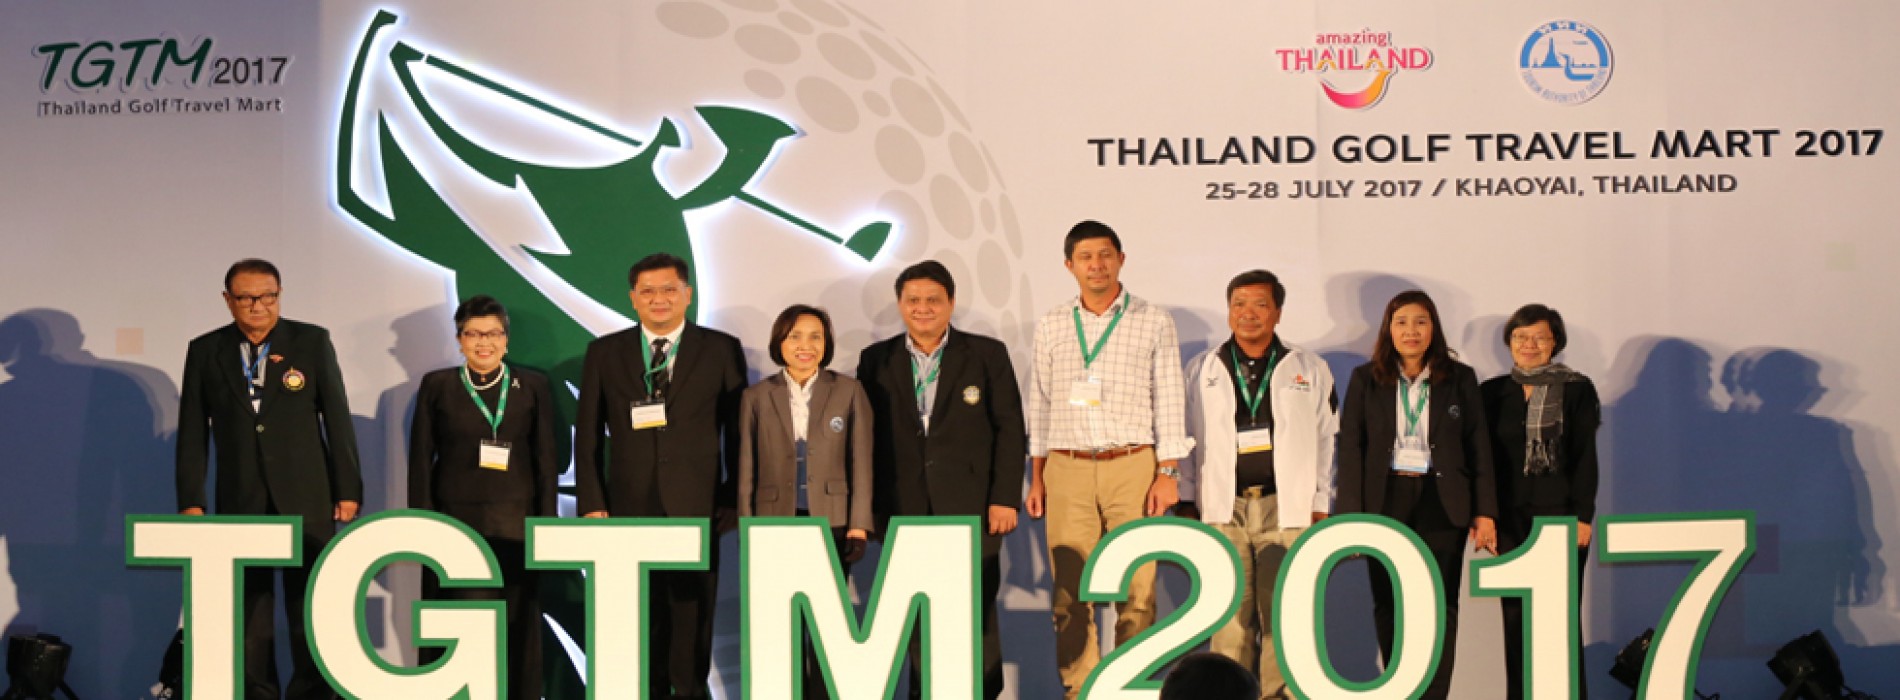 Thailand Golf Travel Mart 2017 showcases world-class golfing experience